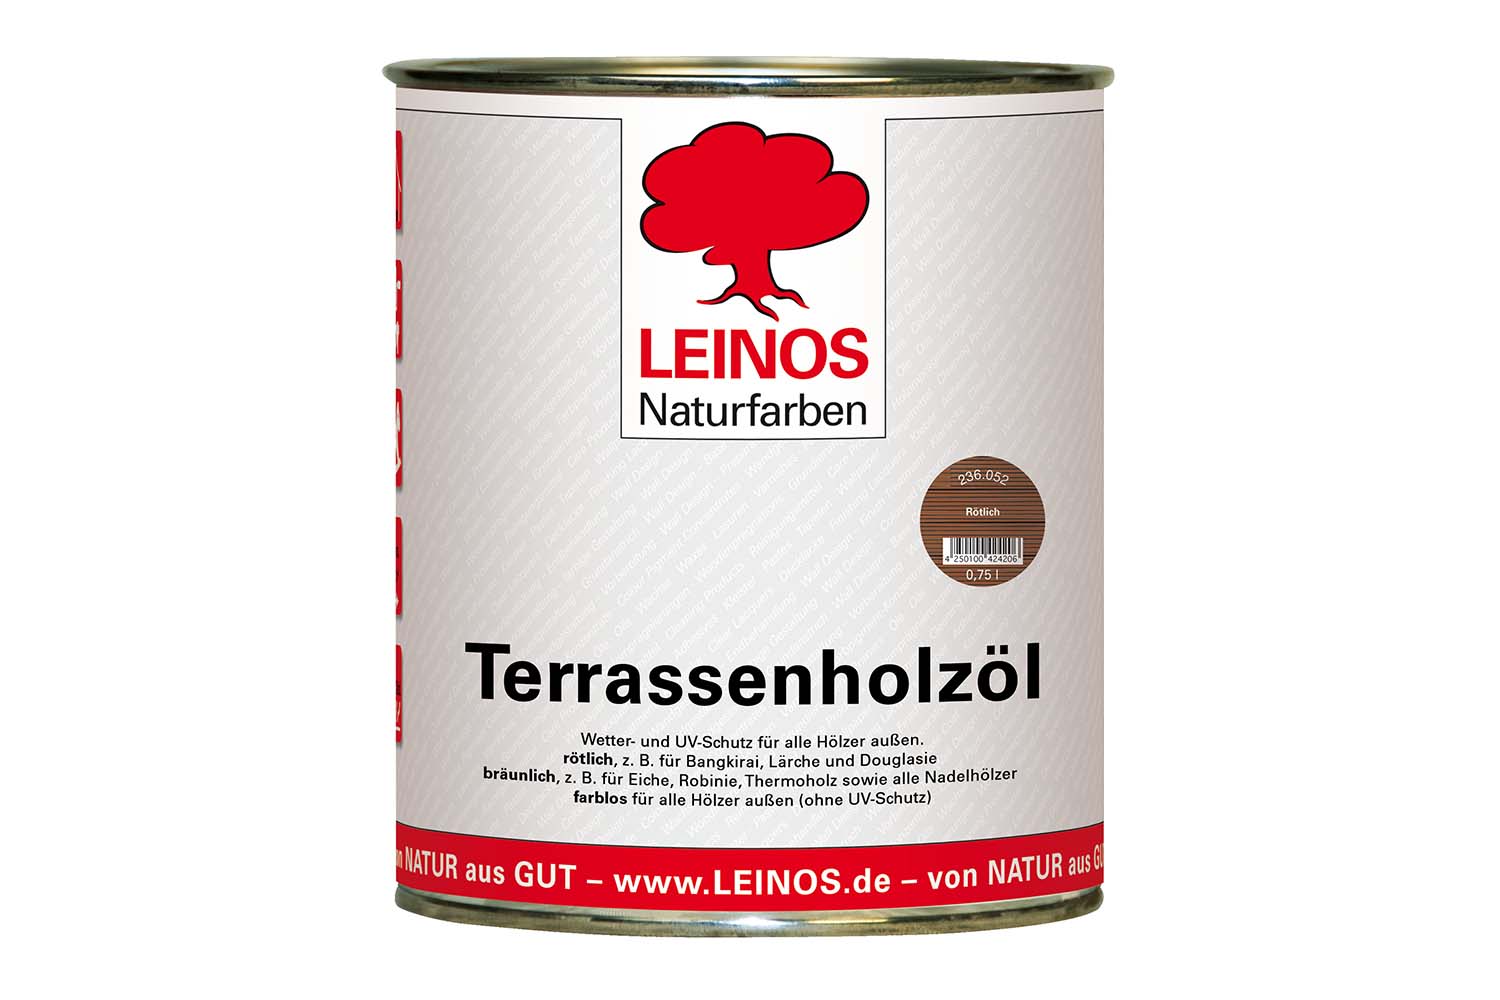 Leinos Terrassenholzöl 236 Rötlich